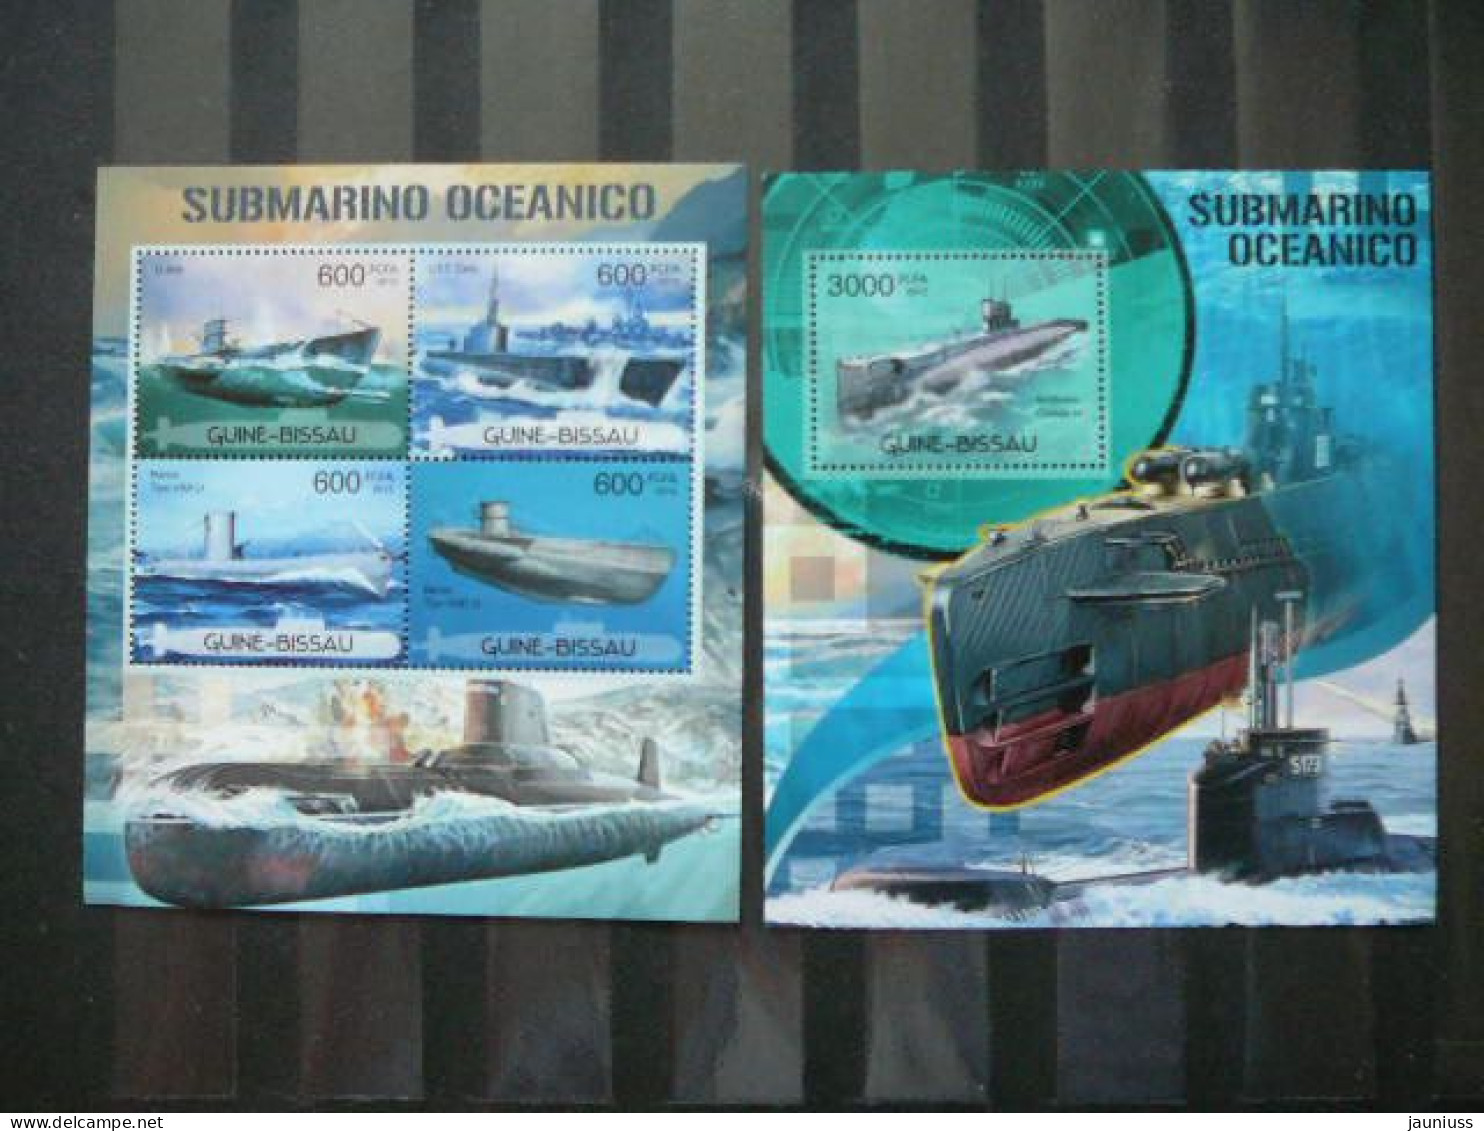 Submarines Ships # Guinea Bissau 2012 MNH #5792 - Sous-marins